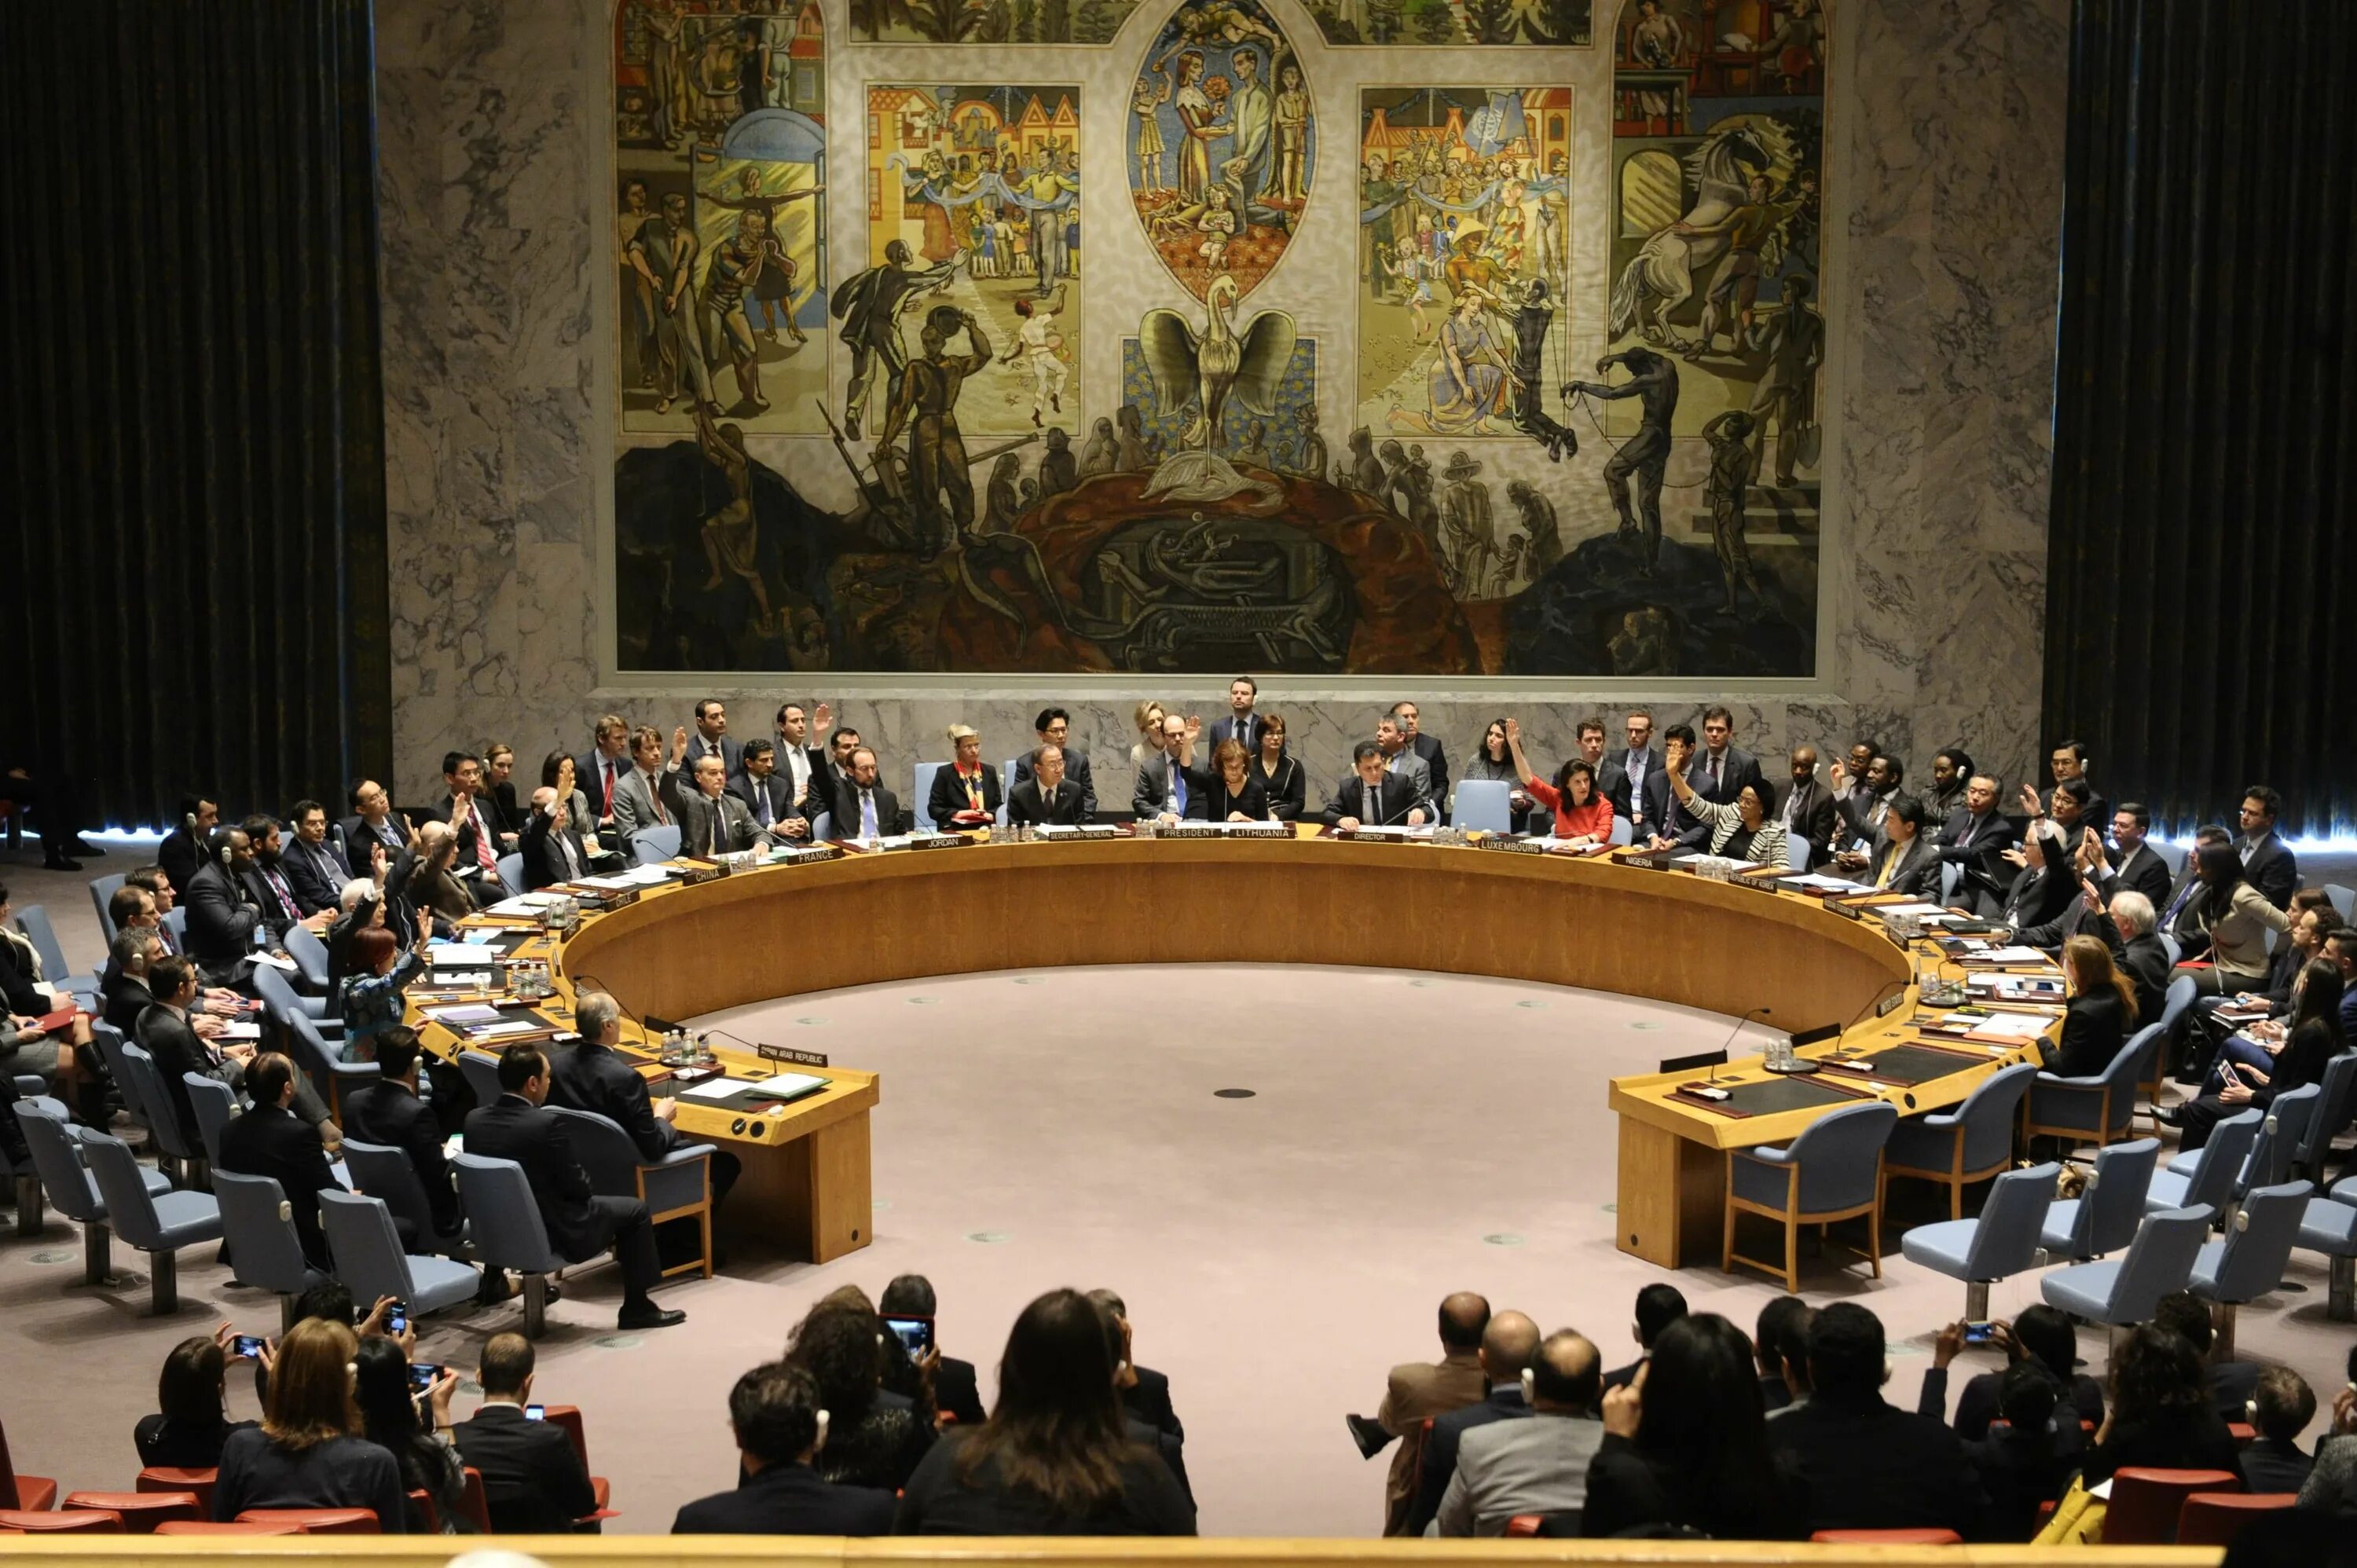 Оон показала. Зал совета безопасности ООН. Зал заседаний совета безопасности ООН. Зал заседаний Совбеза ООН. Заседание совета безопасности ООН.